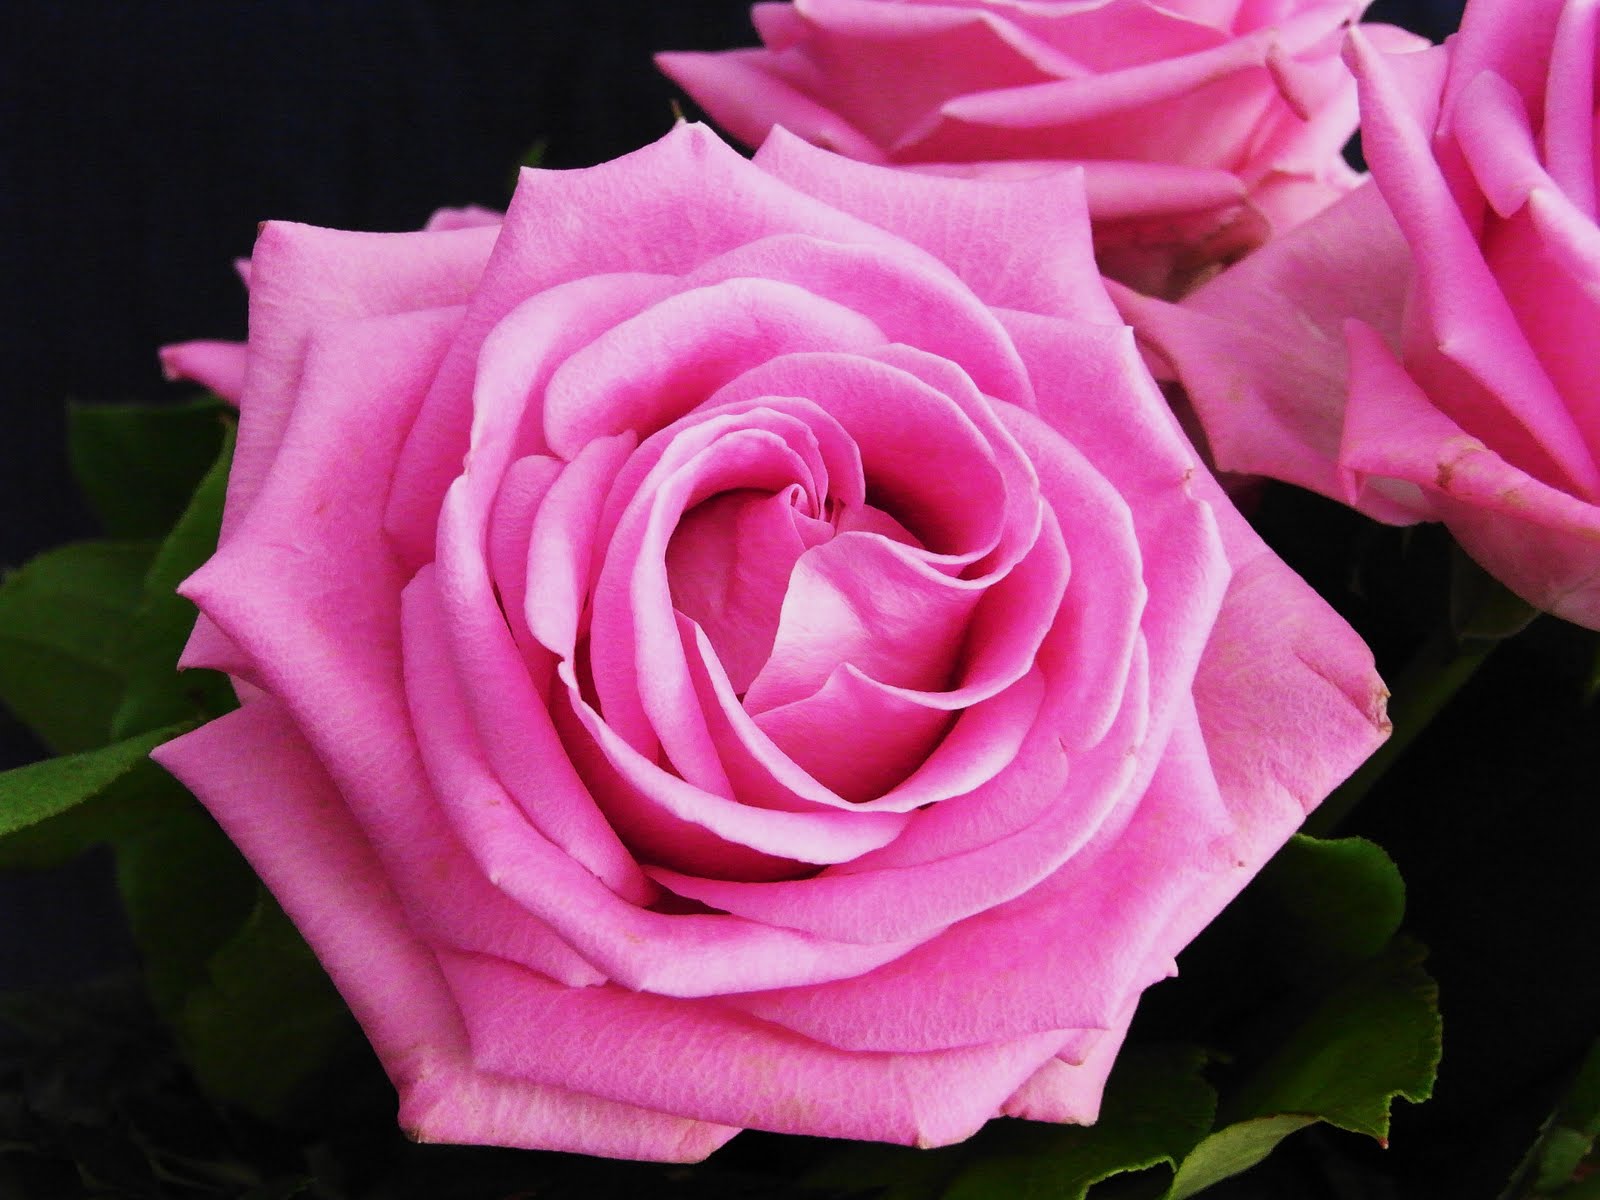 Rose (Rosa): National Flower of Slovakia